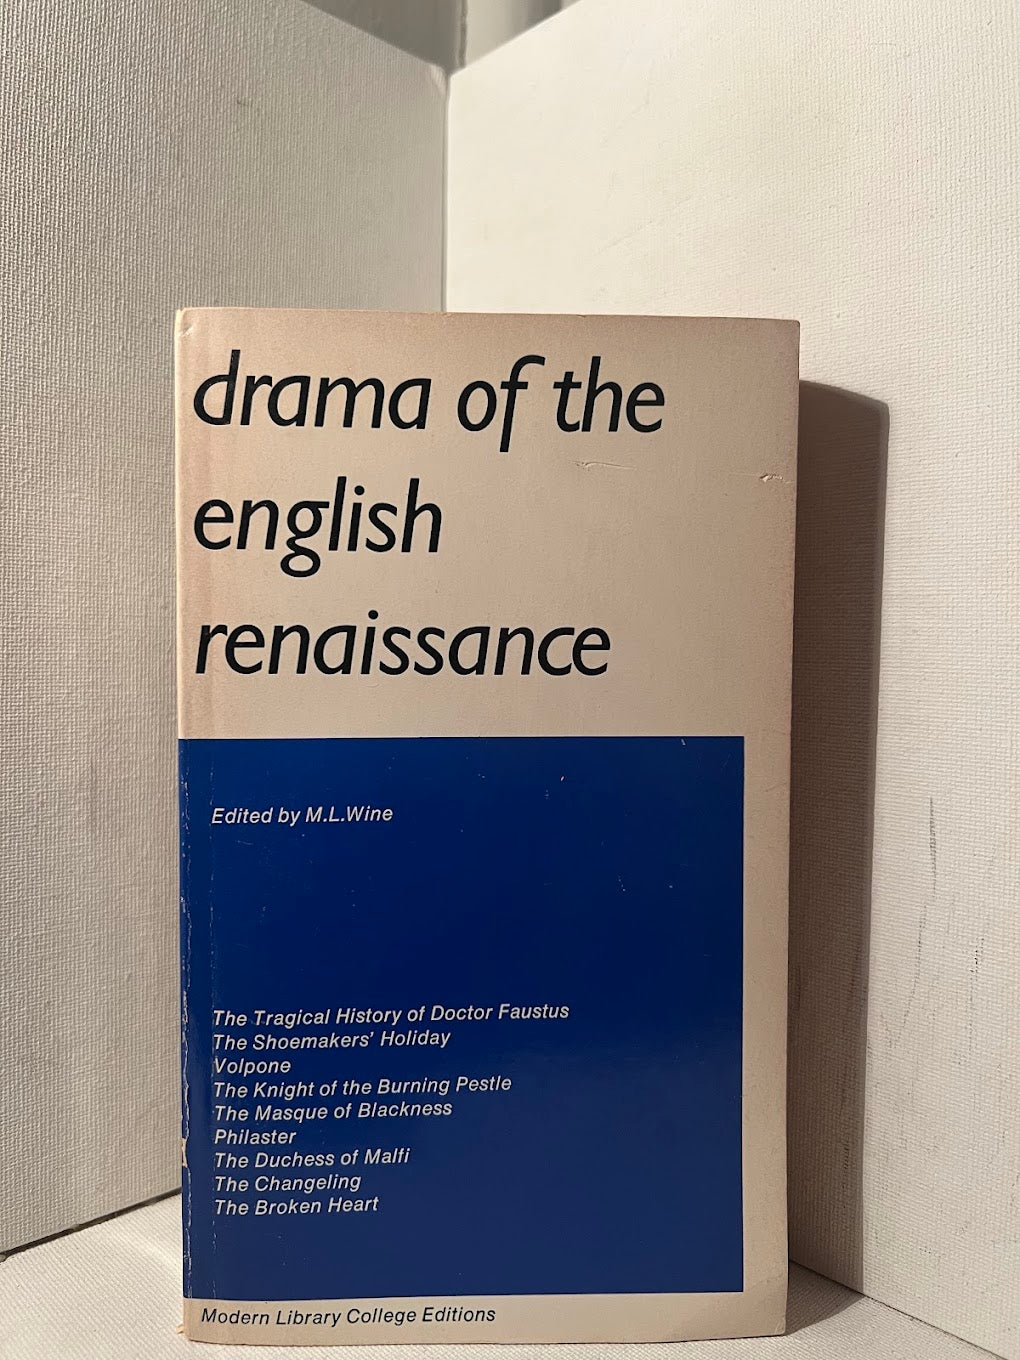 Drama of the English Renaissance edited by M.L. Wine